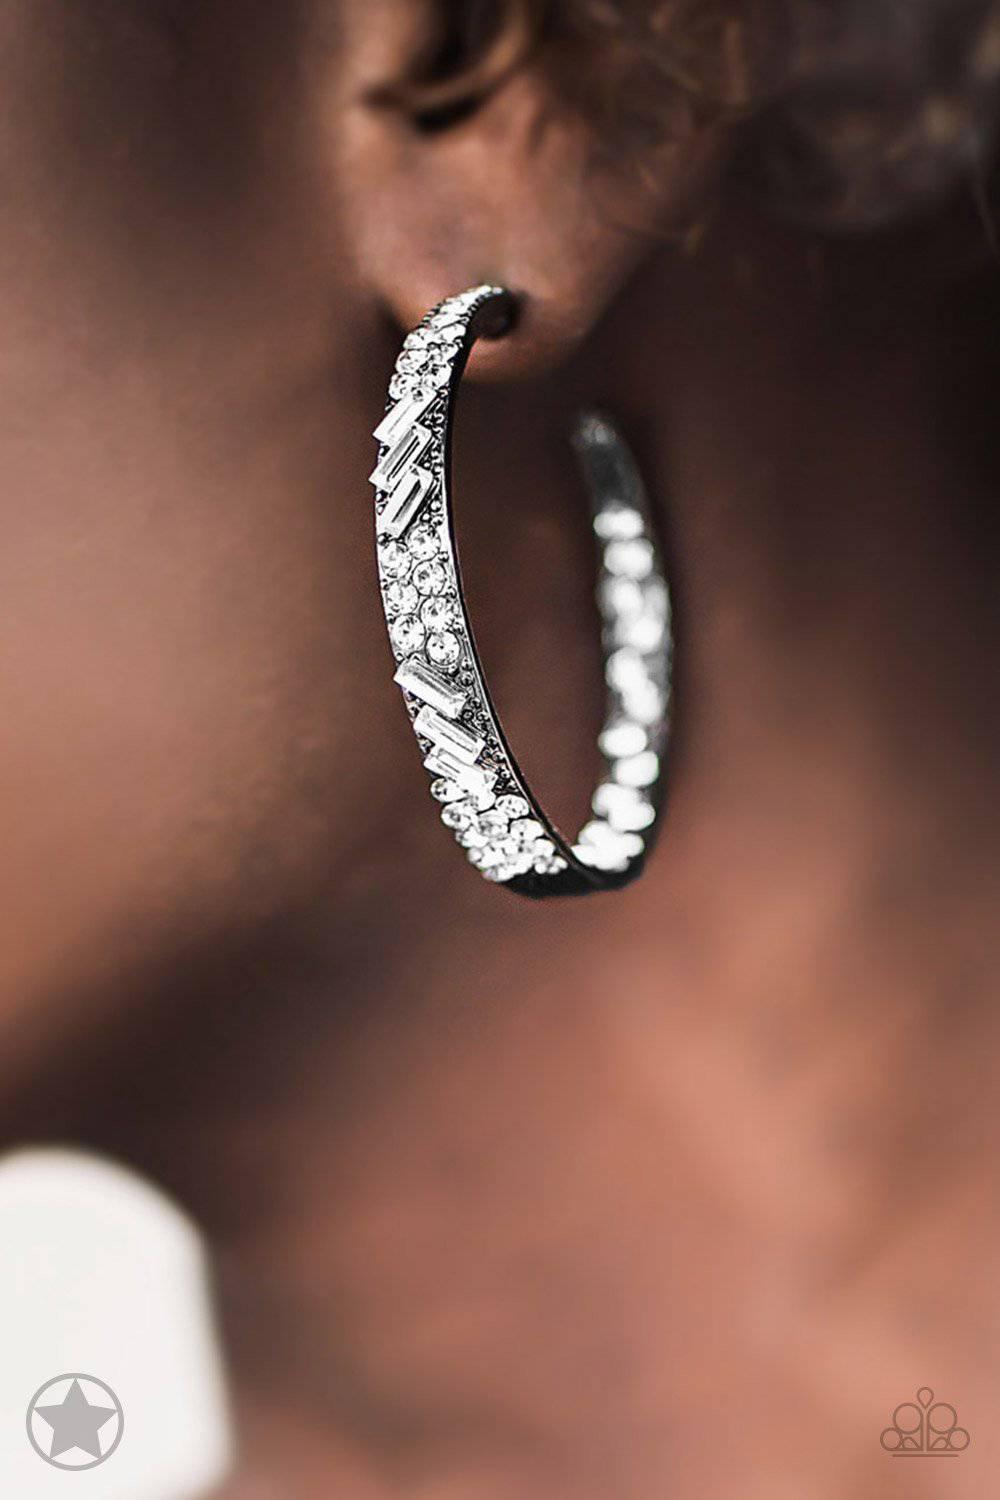 GLITZY By Association - Gunmetal Rhinestone Earrings - Paparazzi Accessories - GlaMarous Titi Jewels